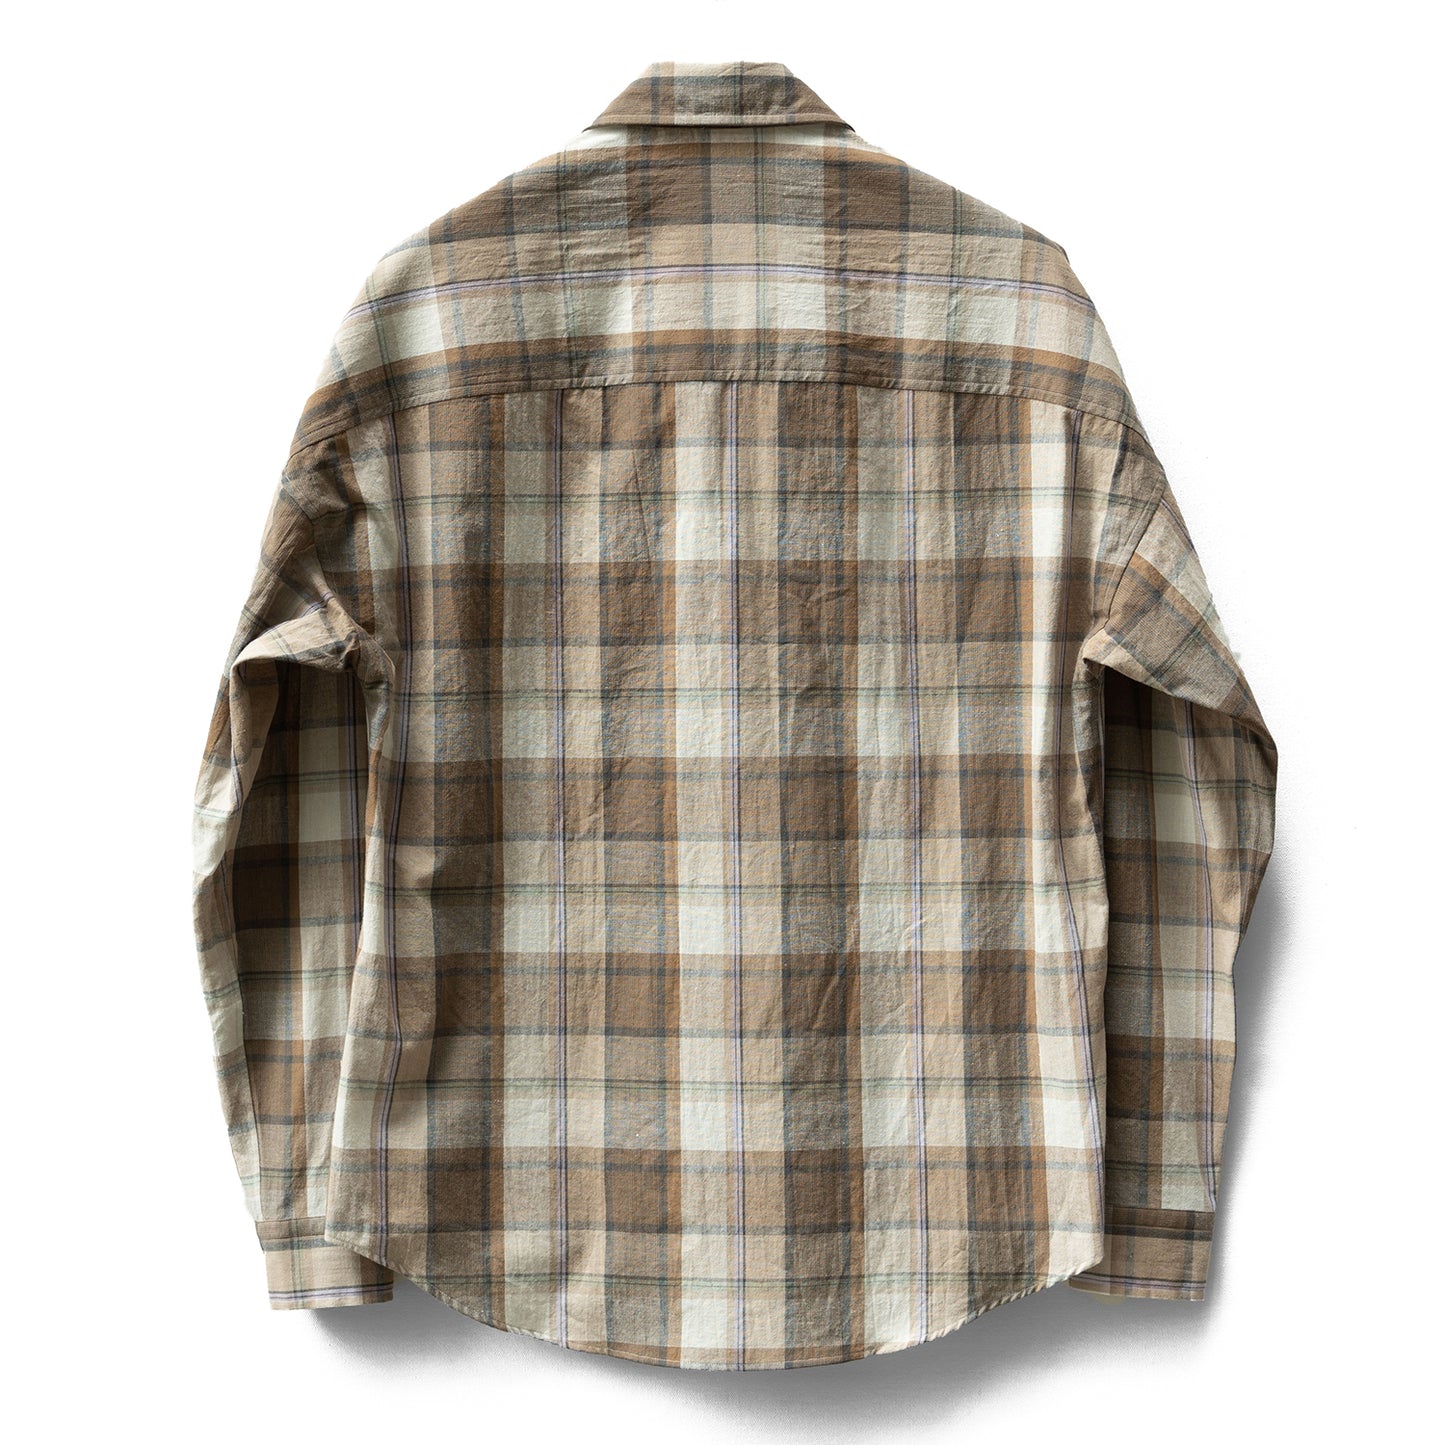 COLONY CLOTHING / ビッグチェック プールサイドシャツ / CC2301-SH02-02